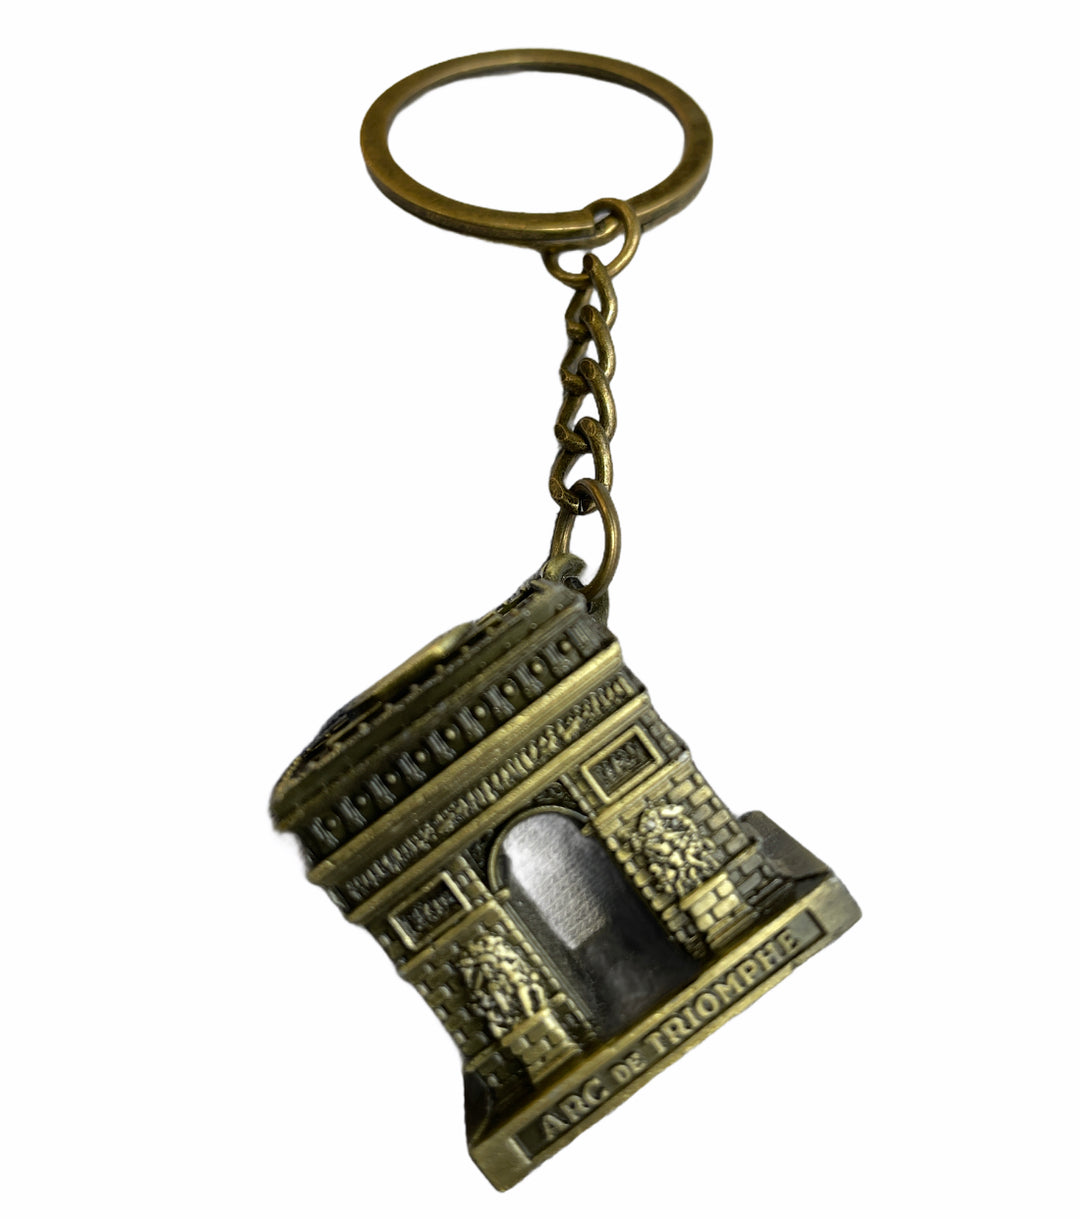 Keychain Arc de Triomphe in Paris